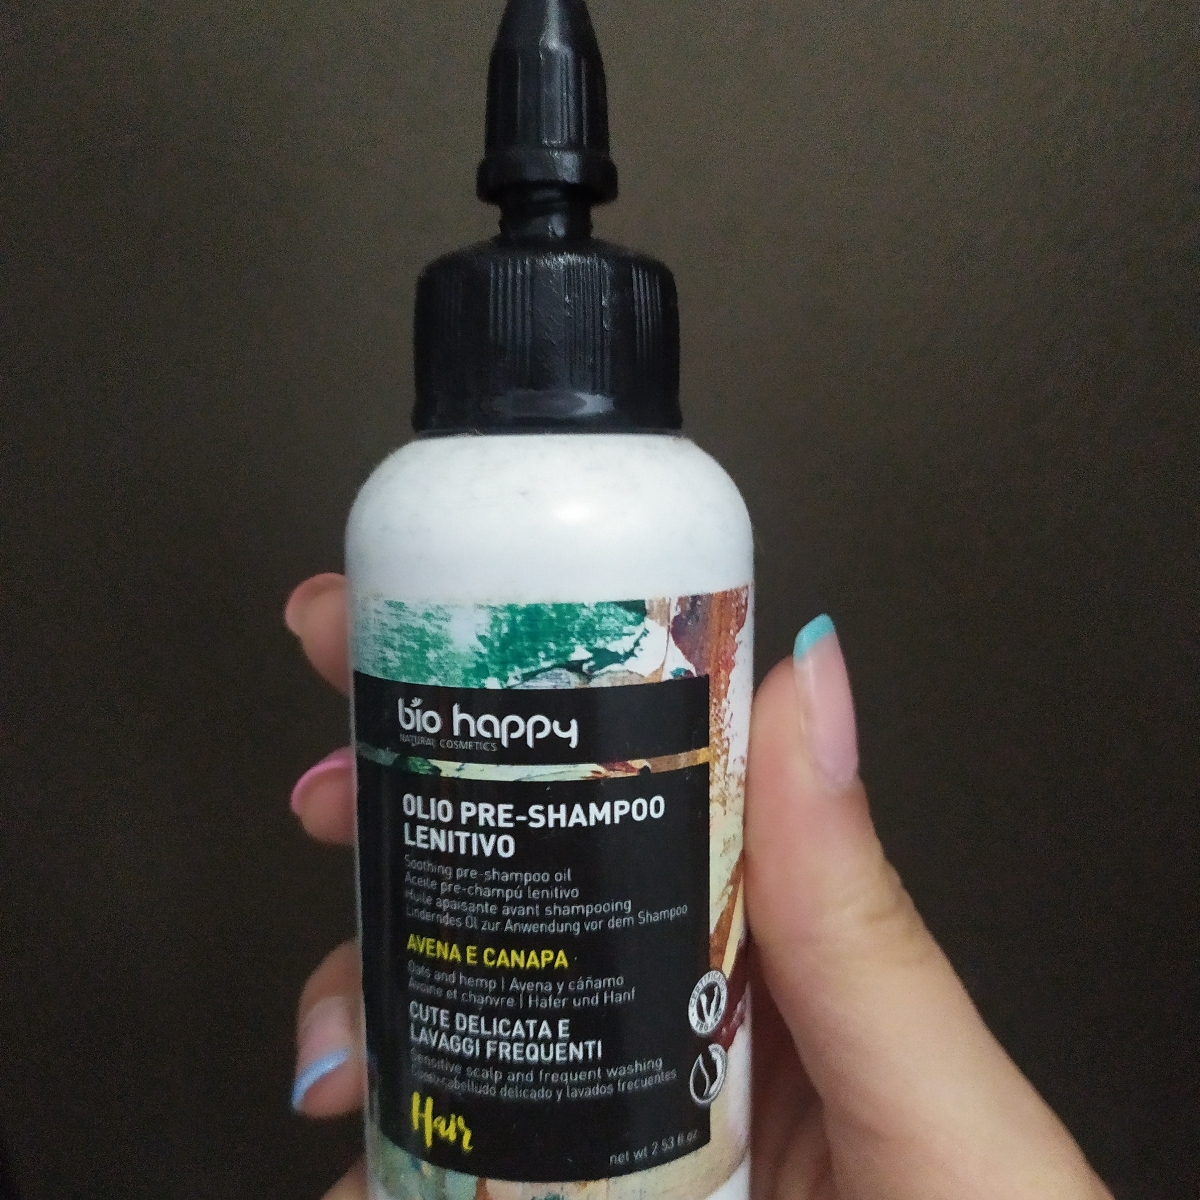 Bio Happy olio pre shampoo Reviews | abillion